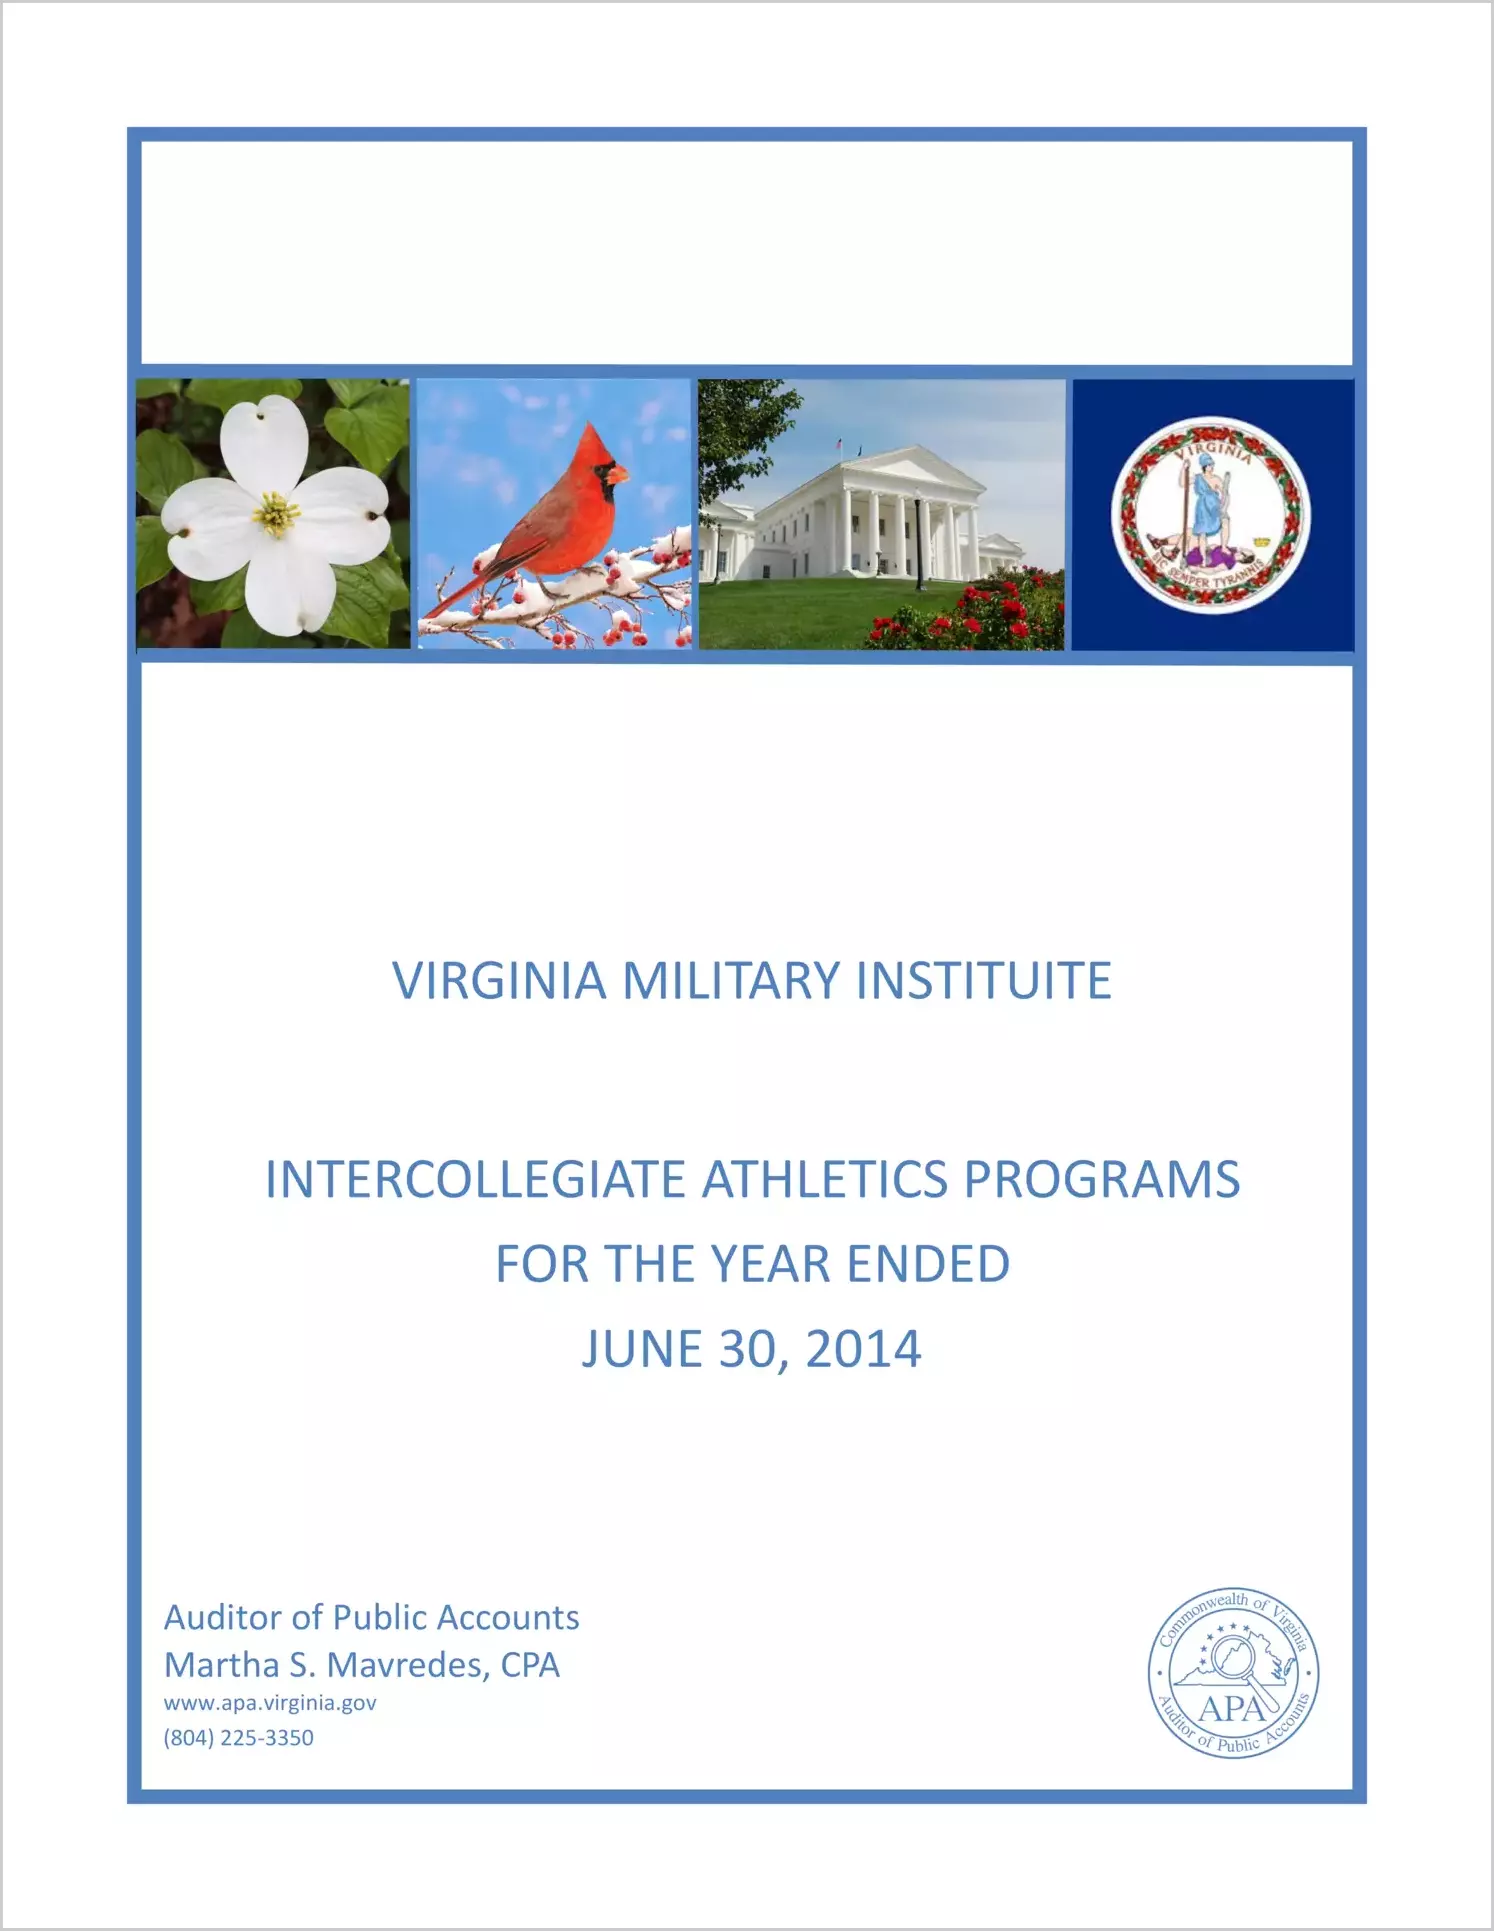 Virginia Military Institute Intercollegiate Athletics Programs for the year ended June 30, 2014